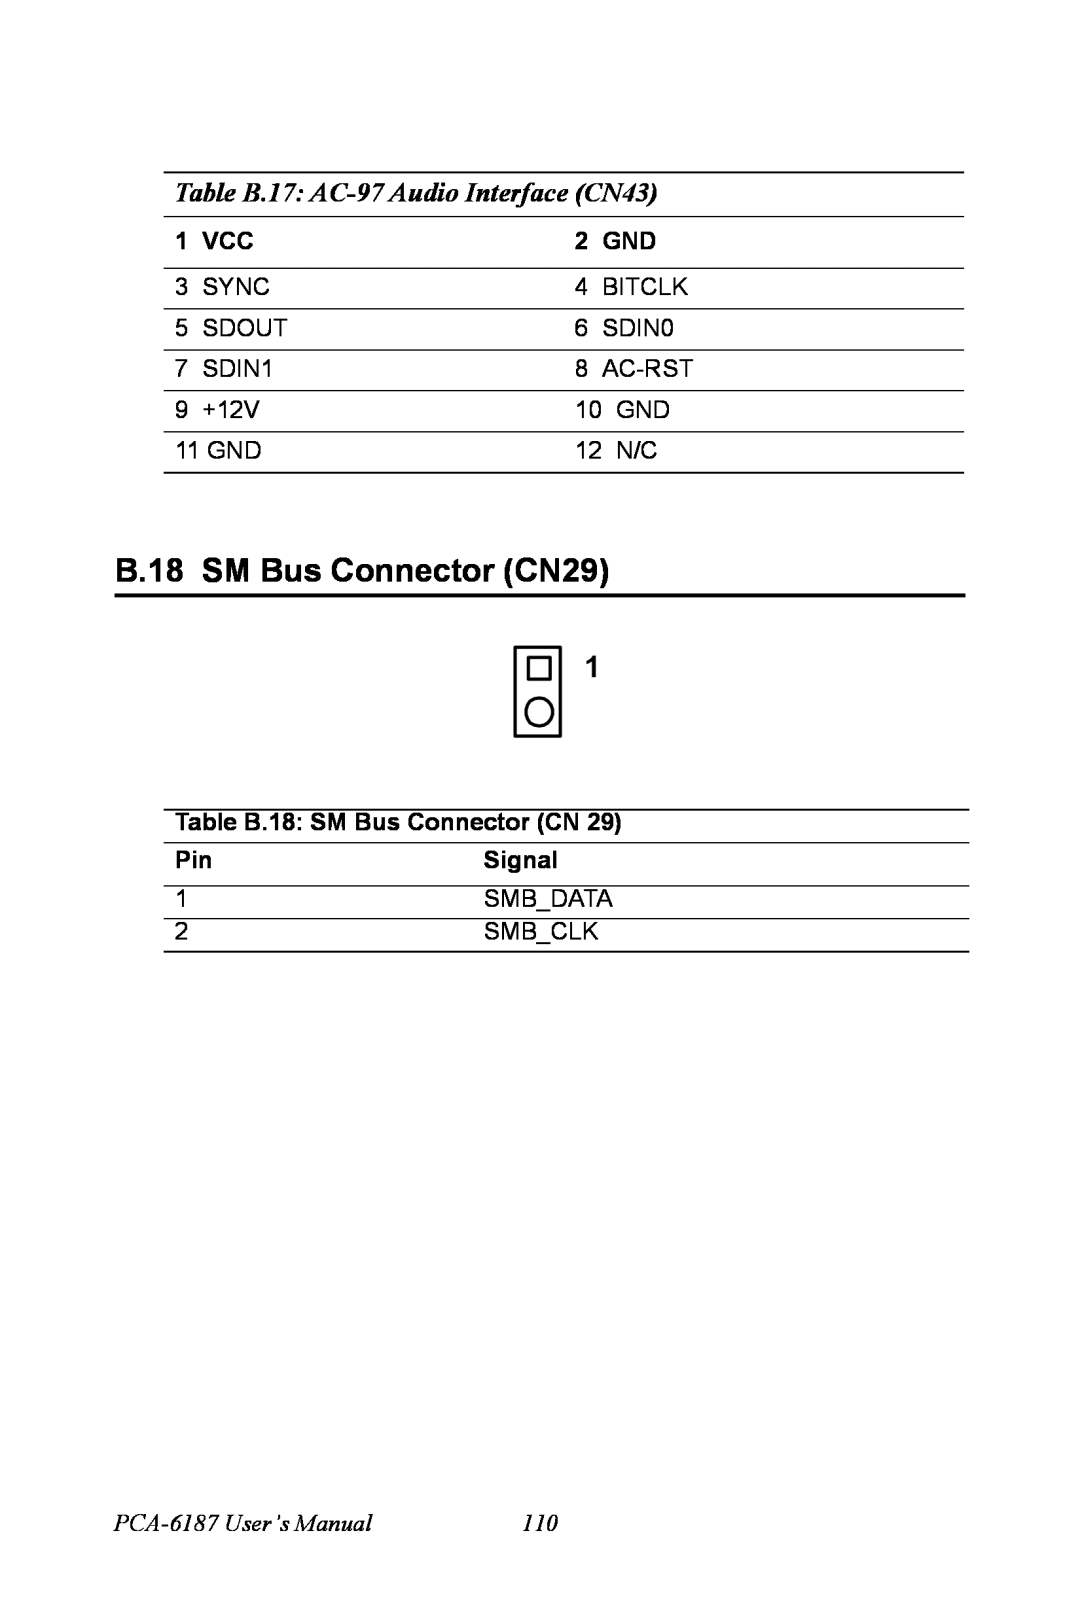 Advantech PCA-6187 B.18 SM Bus Connector CN29, Table B.17 AC-97 Audio Interface CN43, Table B.18 SM Bus Connector CN 